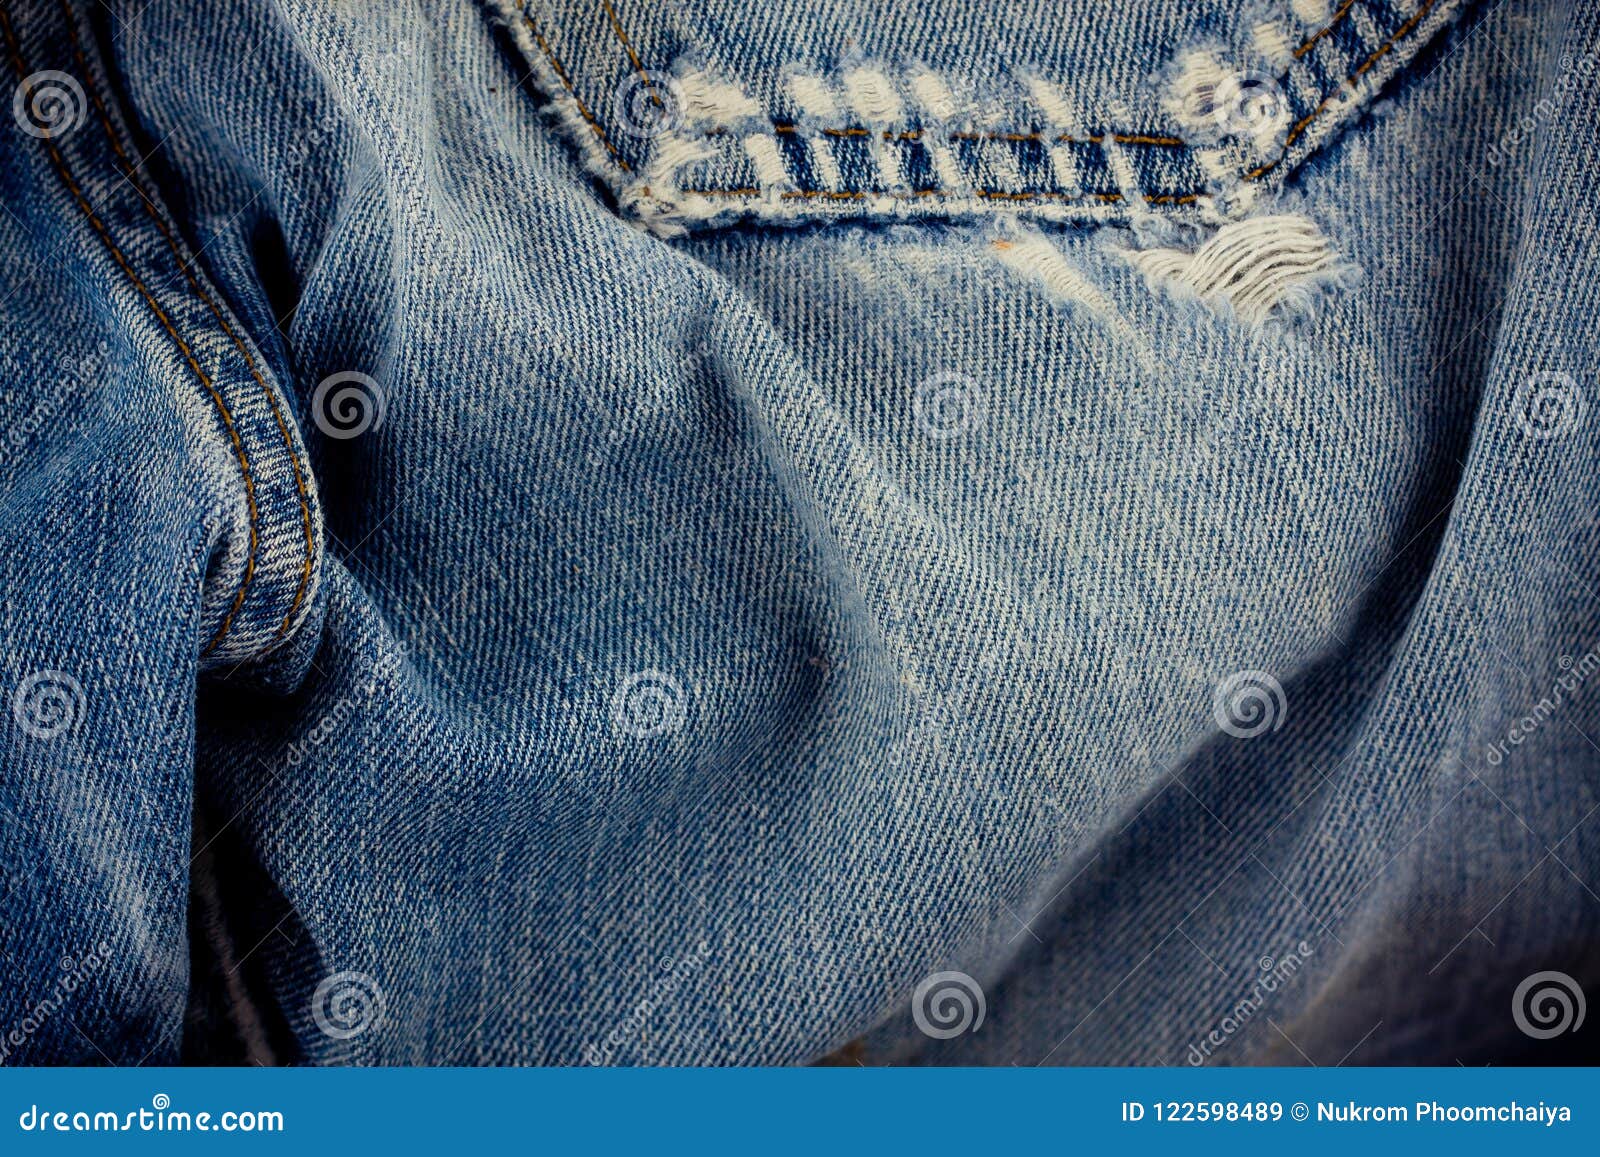 Defective Jeans Background Denim with a Seam of Vintage Fashion Design ...